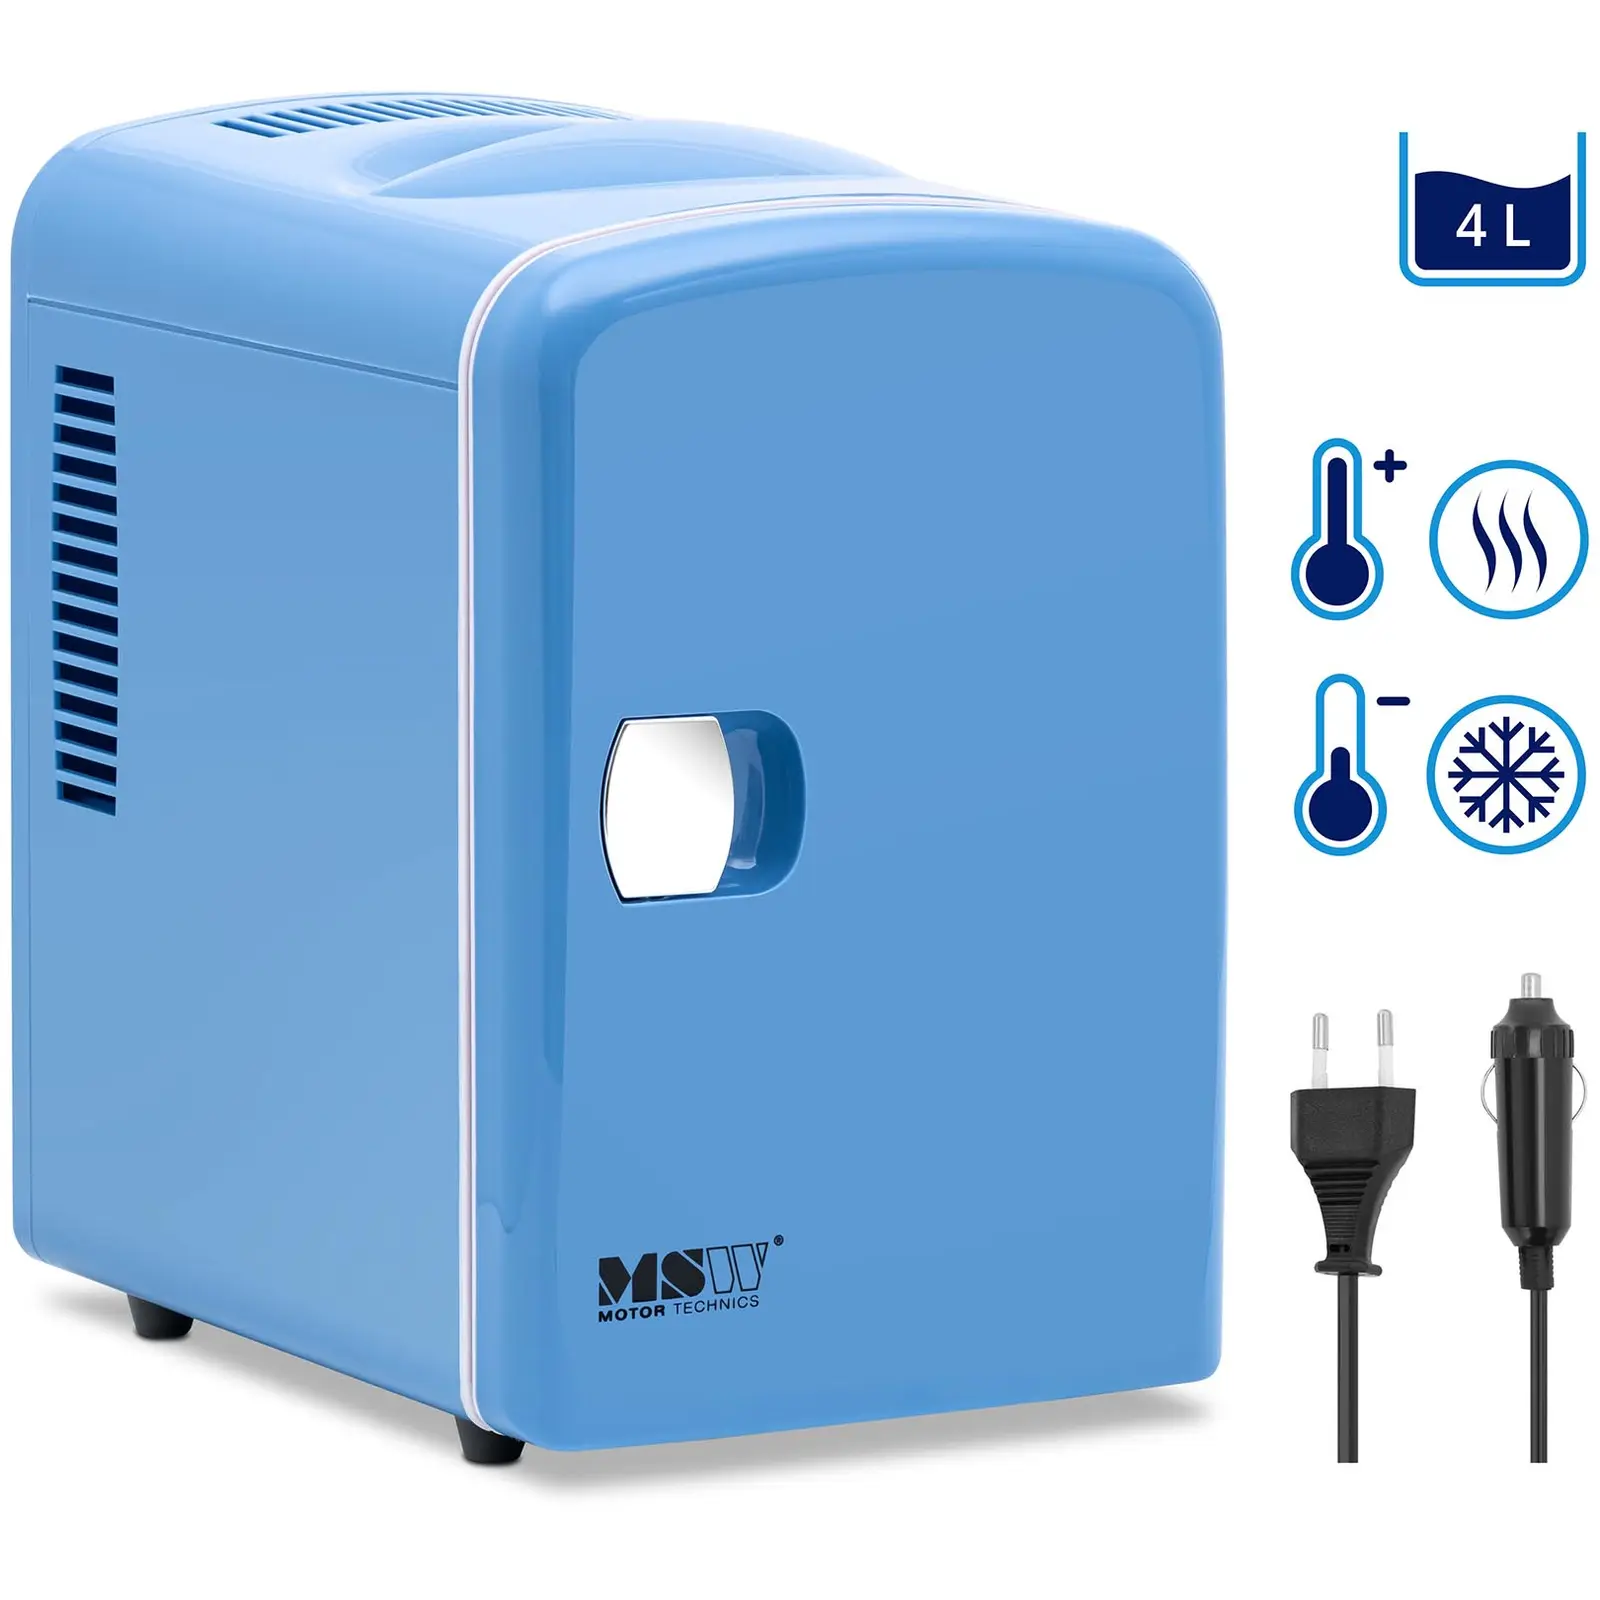 Mini-Kühlschrank 12 V / 230 V - 2-in-1-Gerät mit Warmhaltefunktion - 4 L - Blau